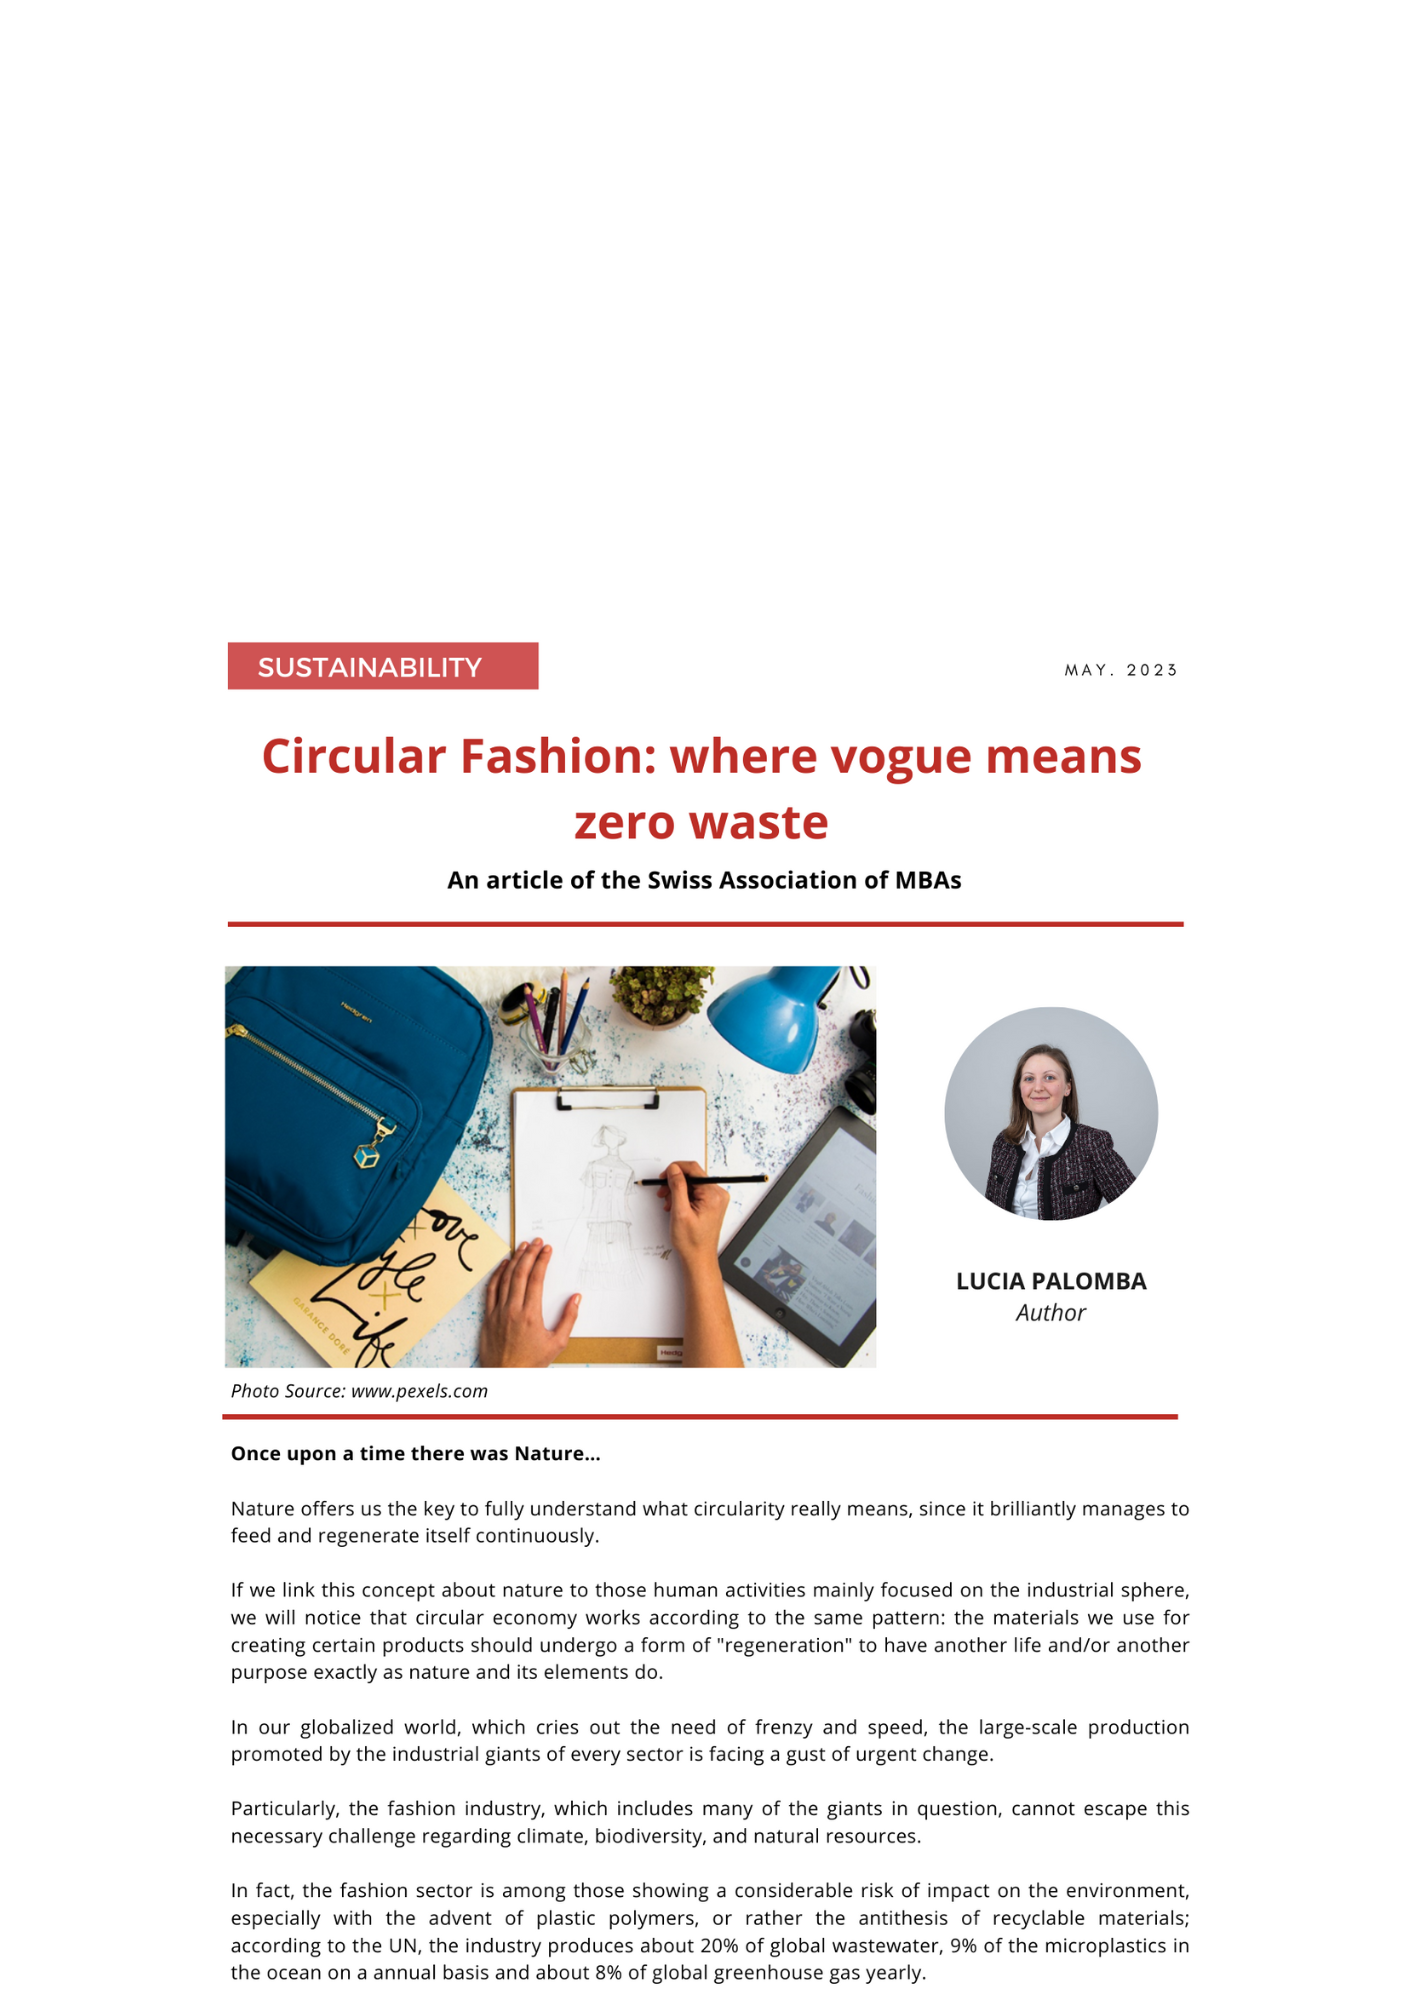 Circular Fashion: where vogue means zero waste